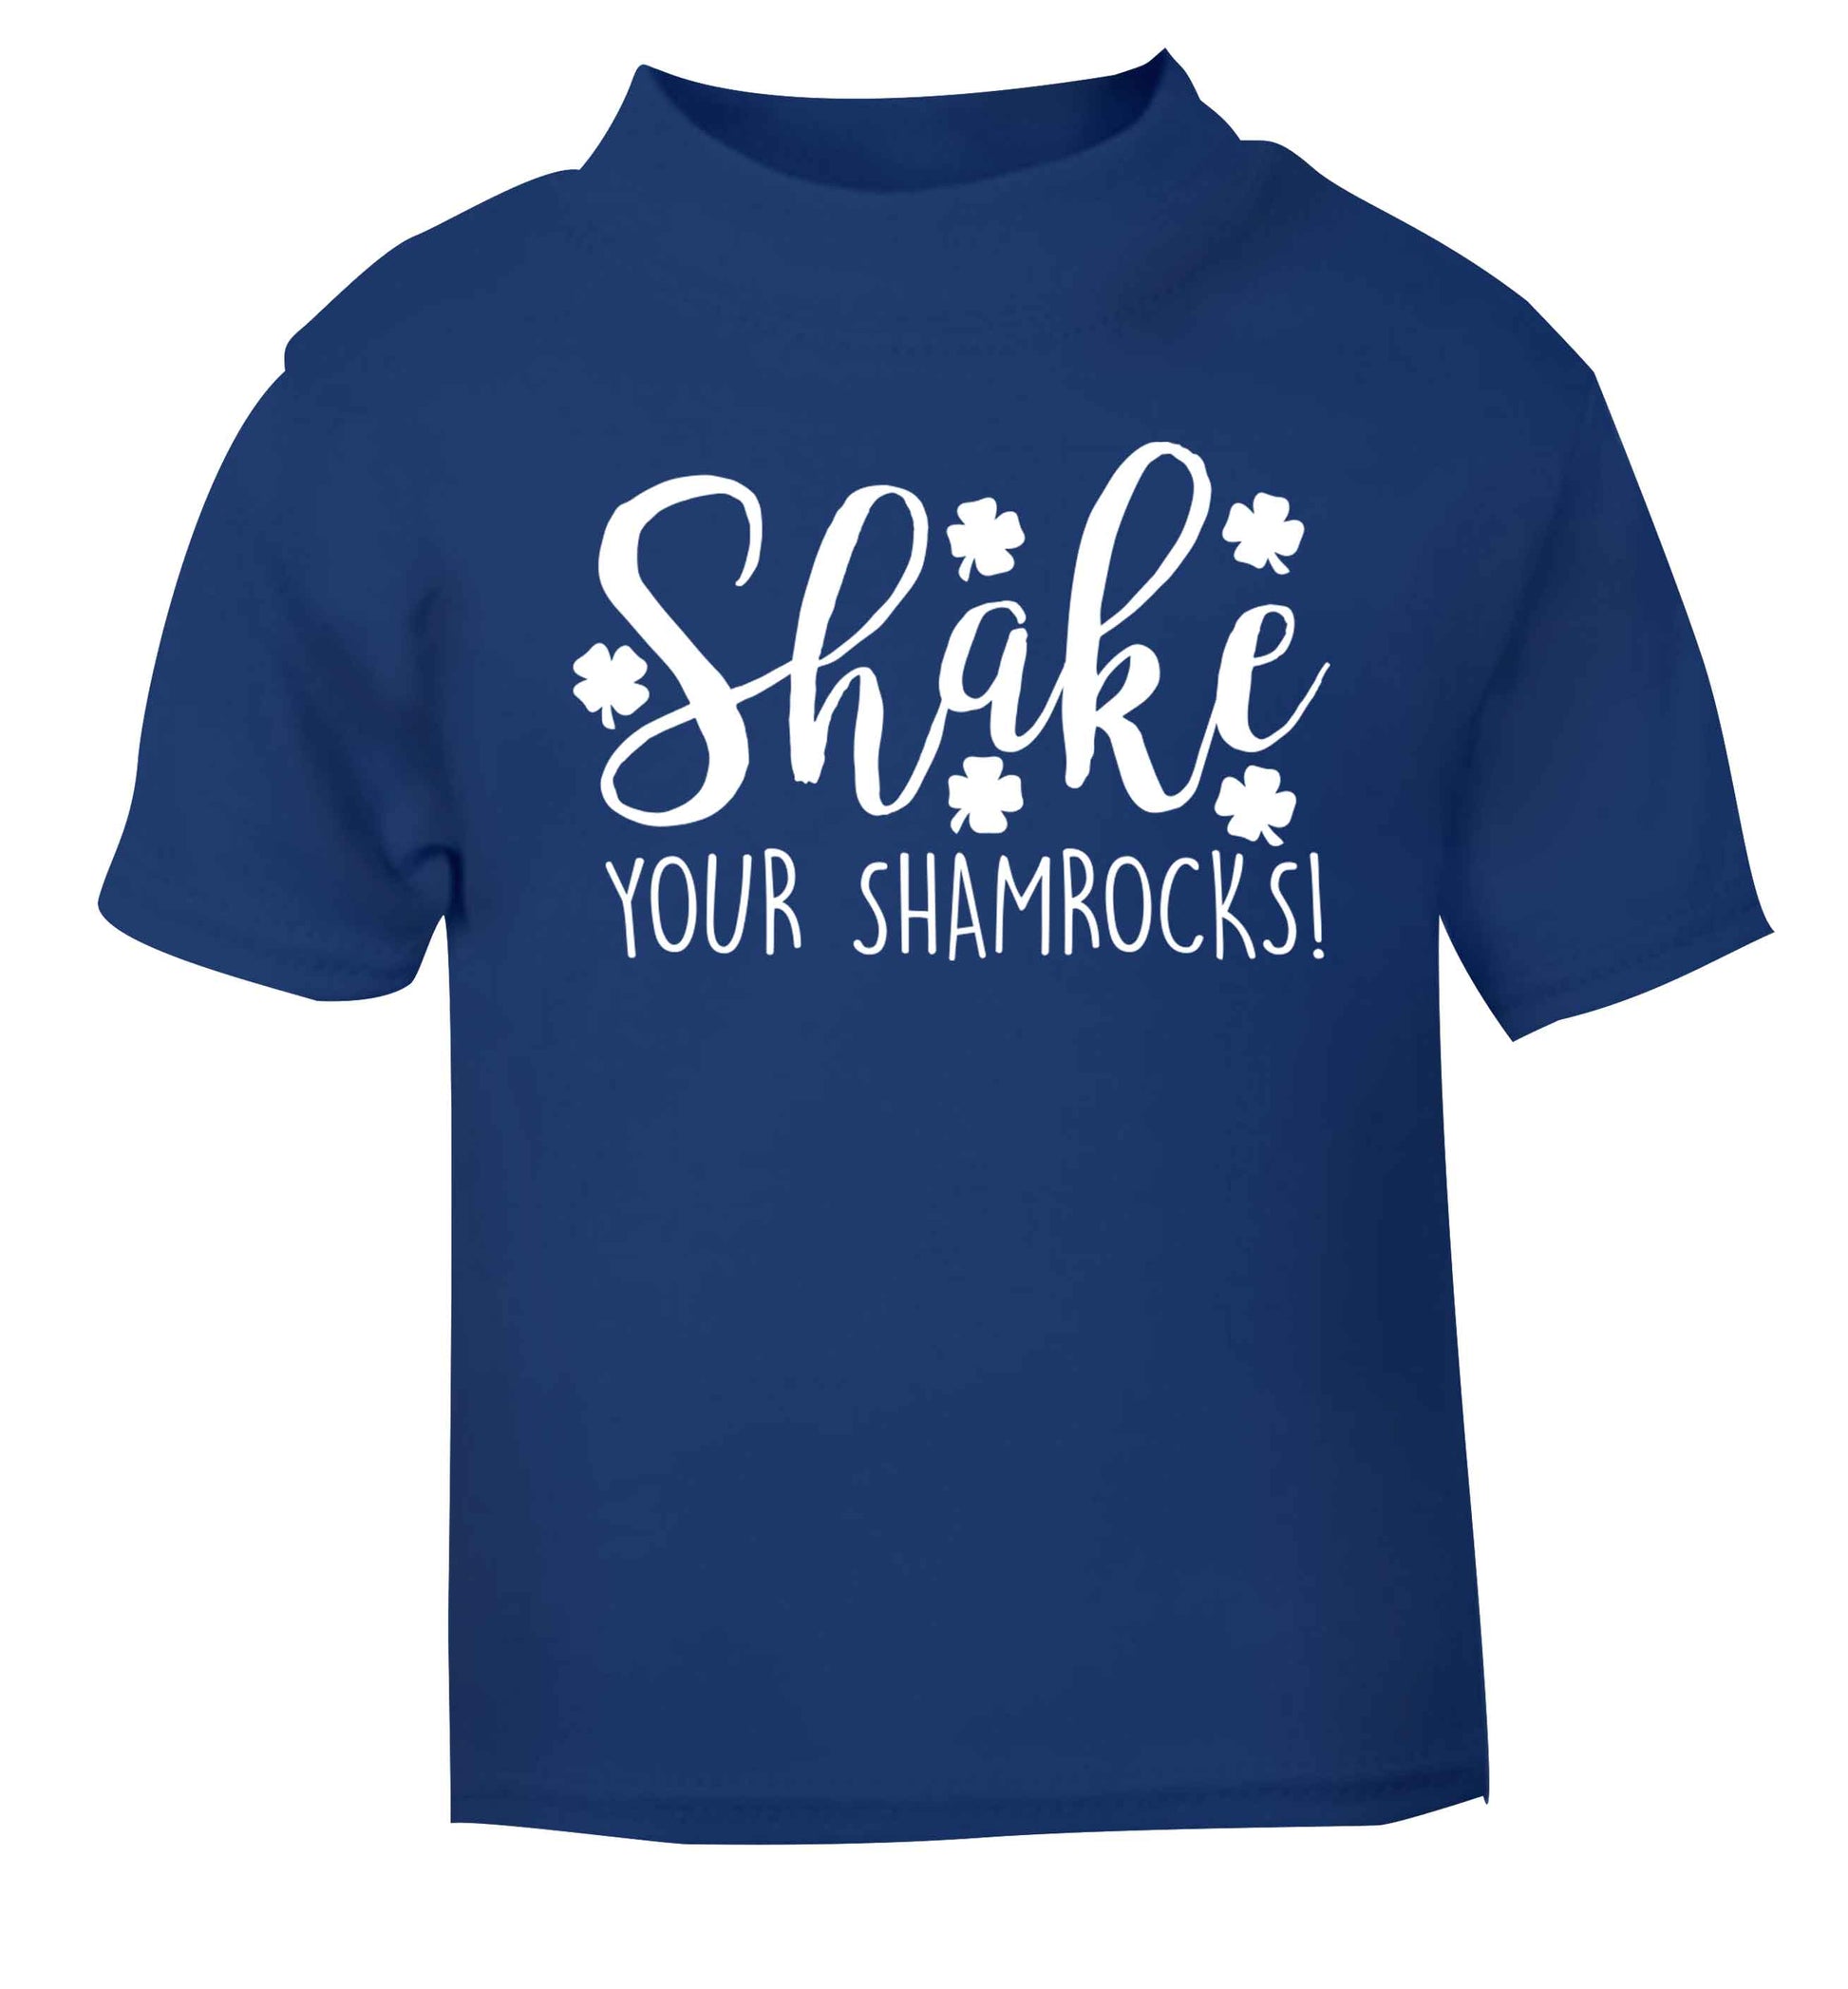 Shake your shamrocks blue baby toddler Tshirt 2 Years